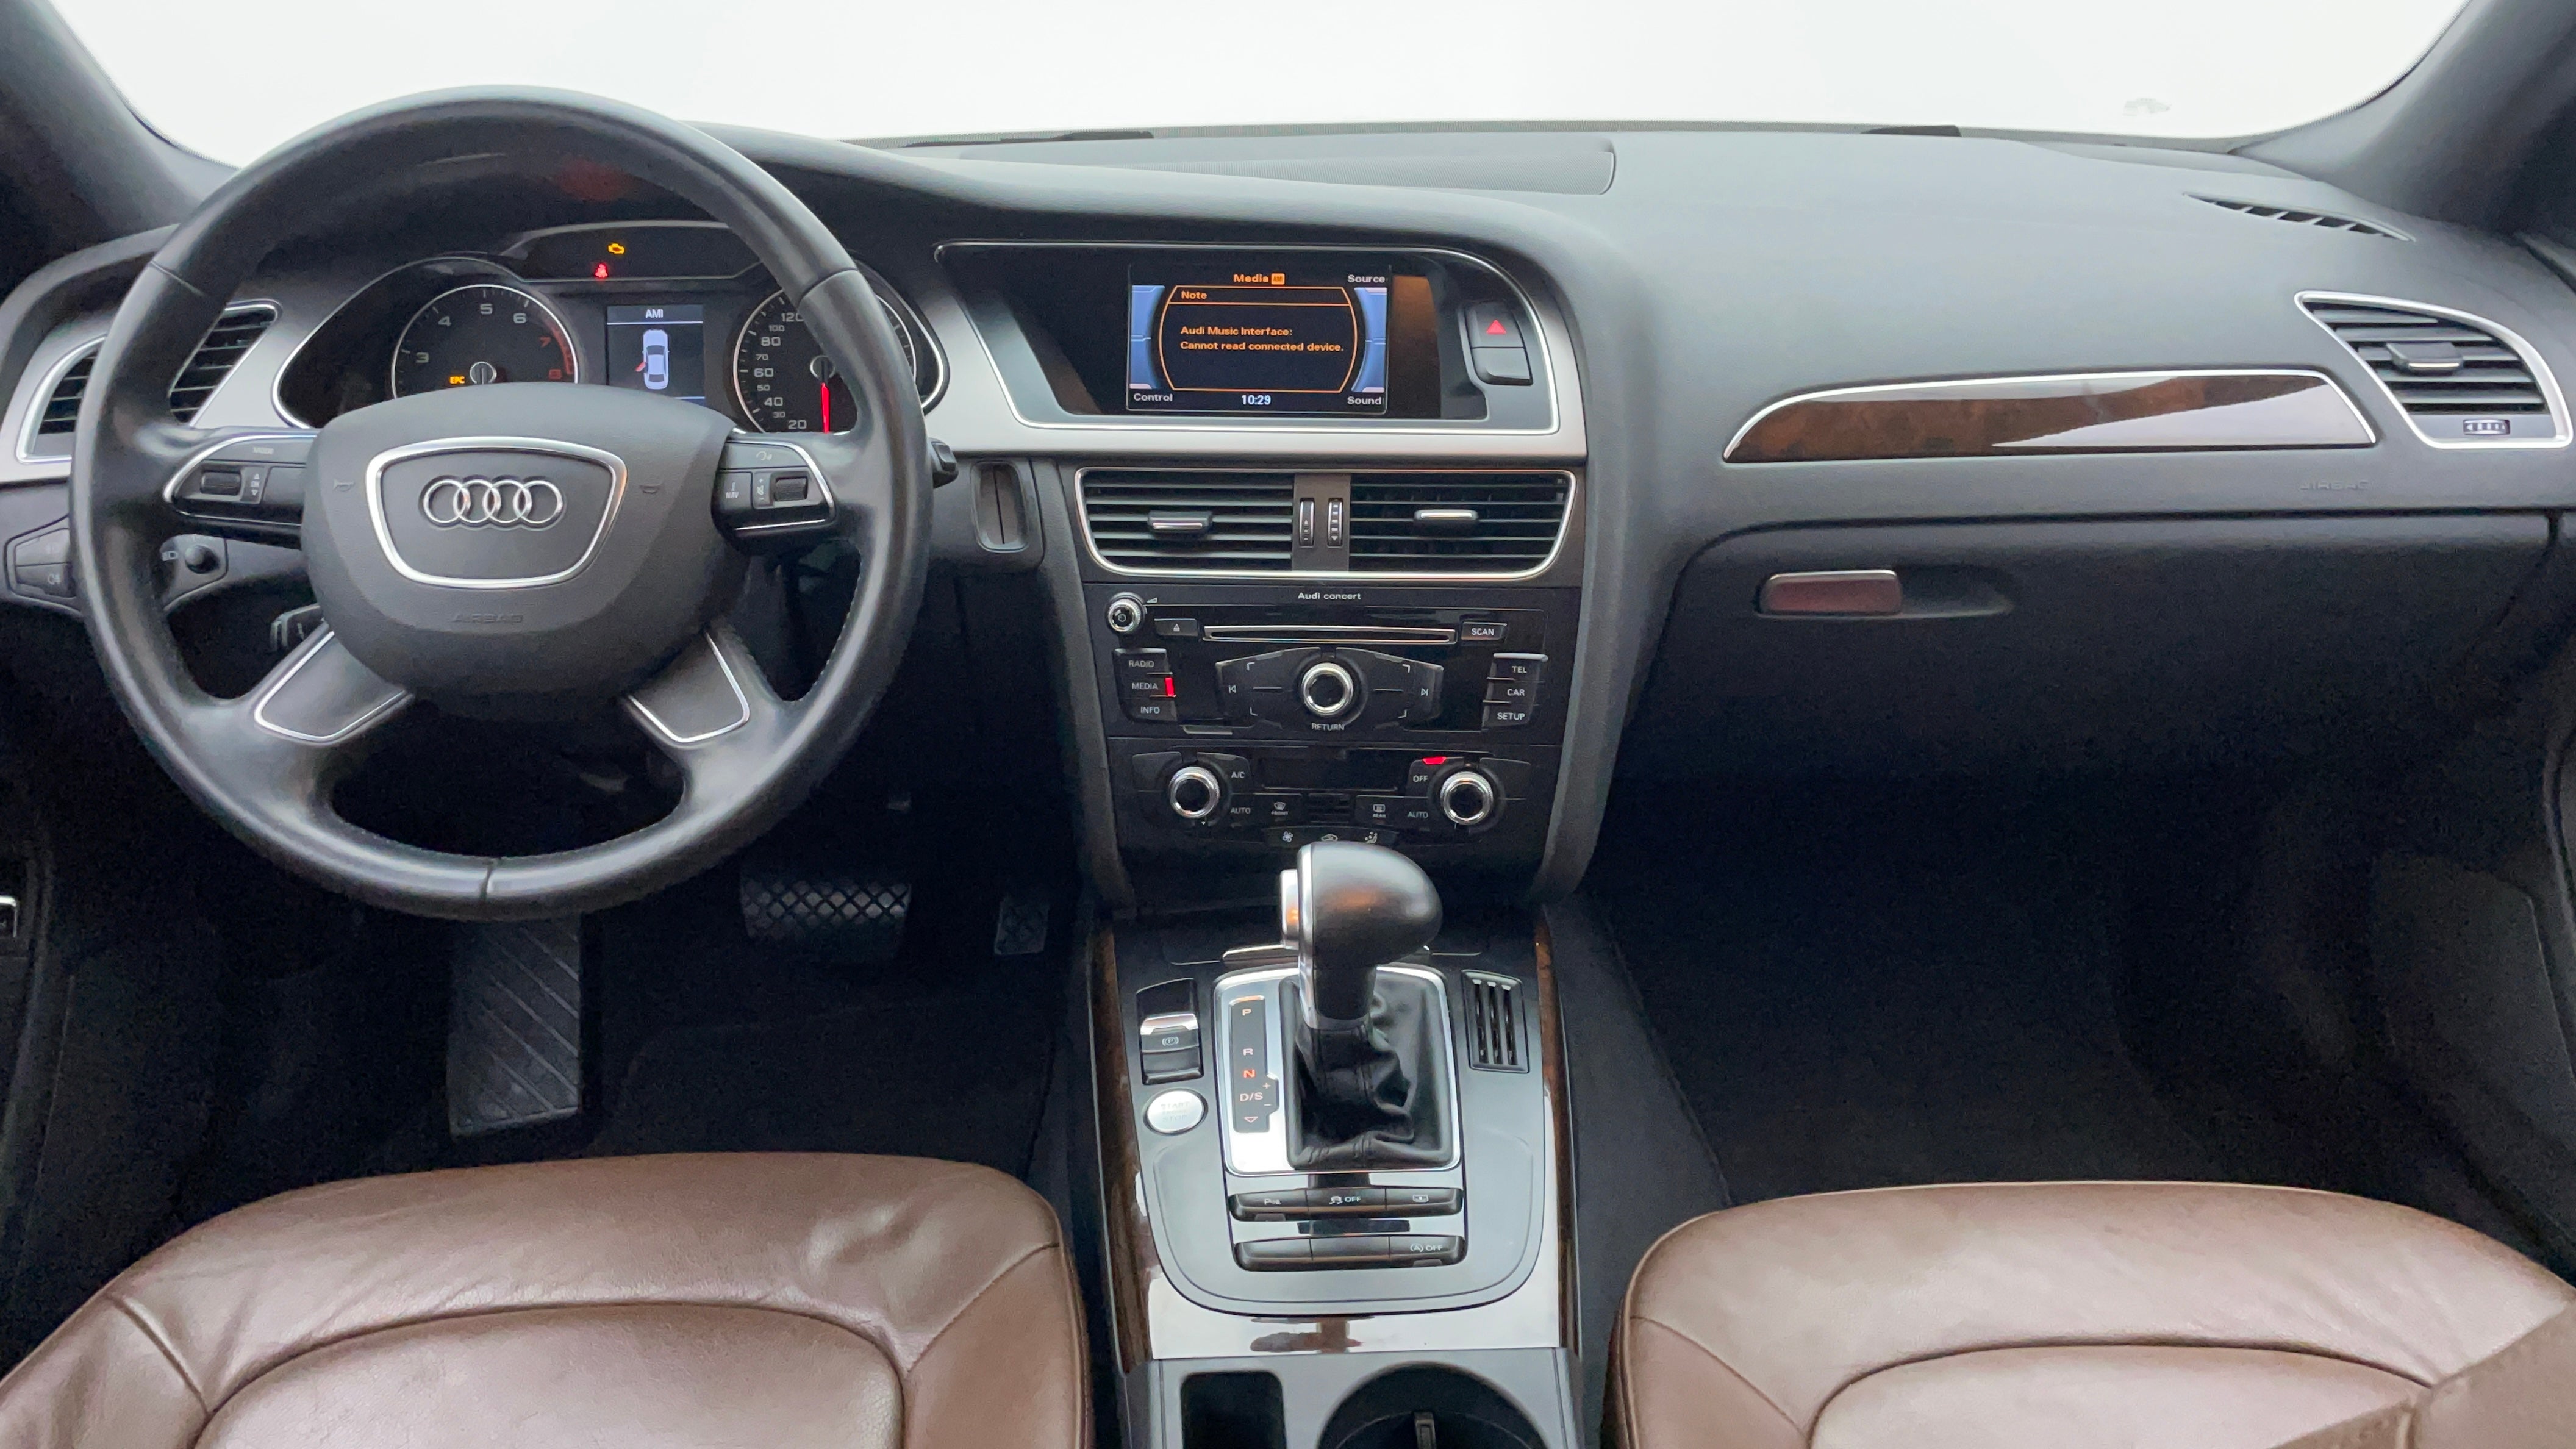 Audi A4-Dashboard View